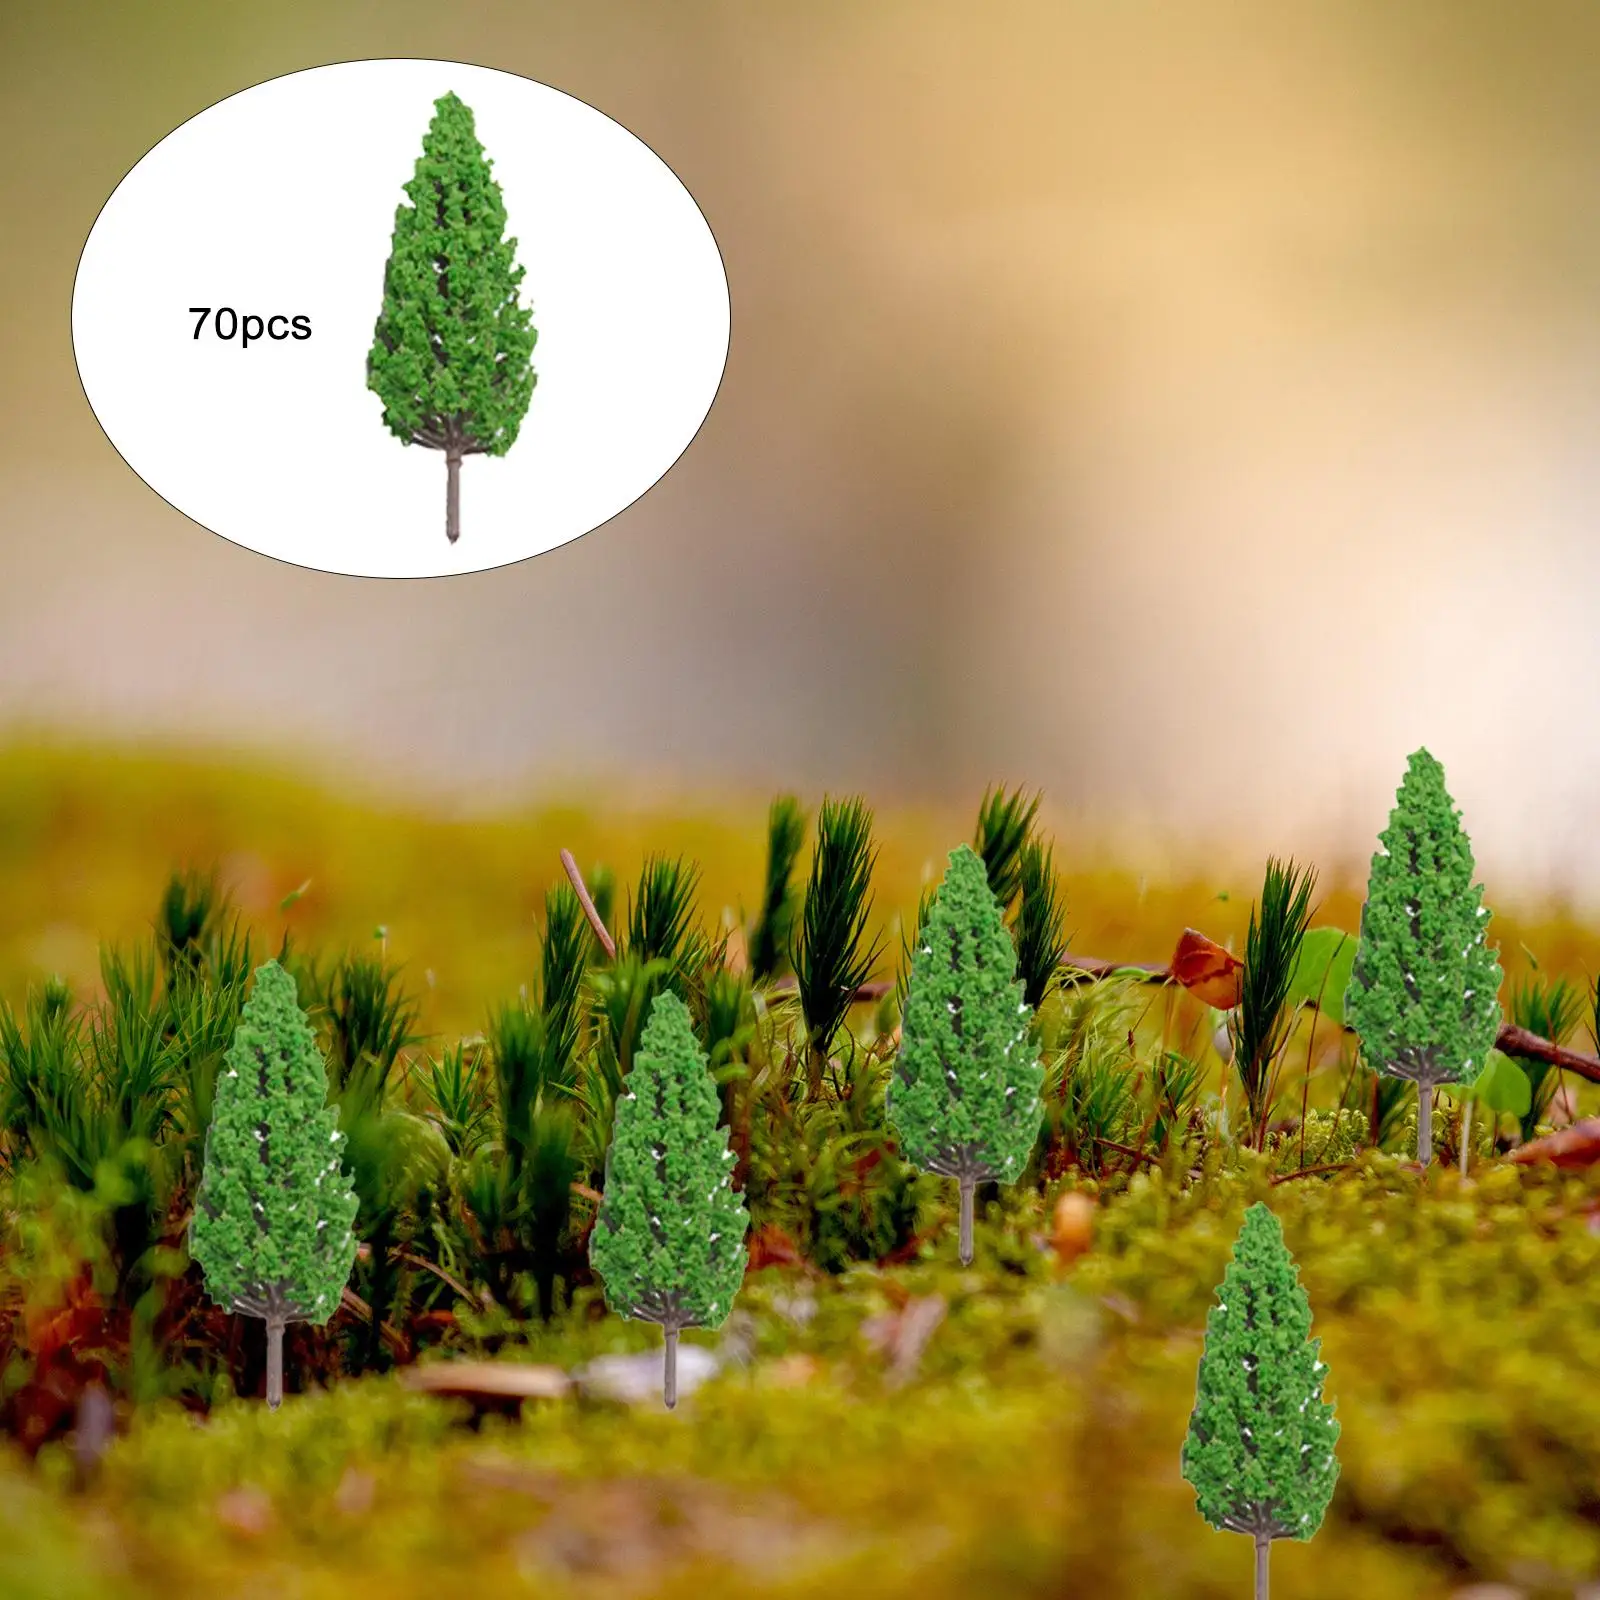 70 Pieces Mini Landscape Tree Model Trees for DIY Crafts Miniature Scenery